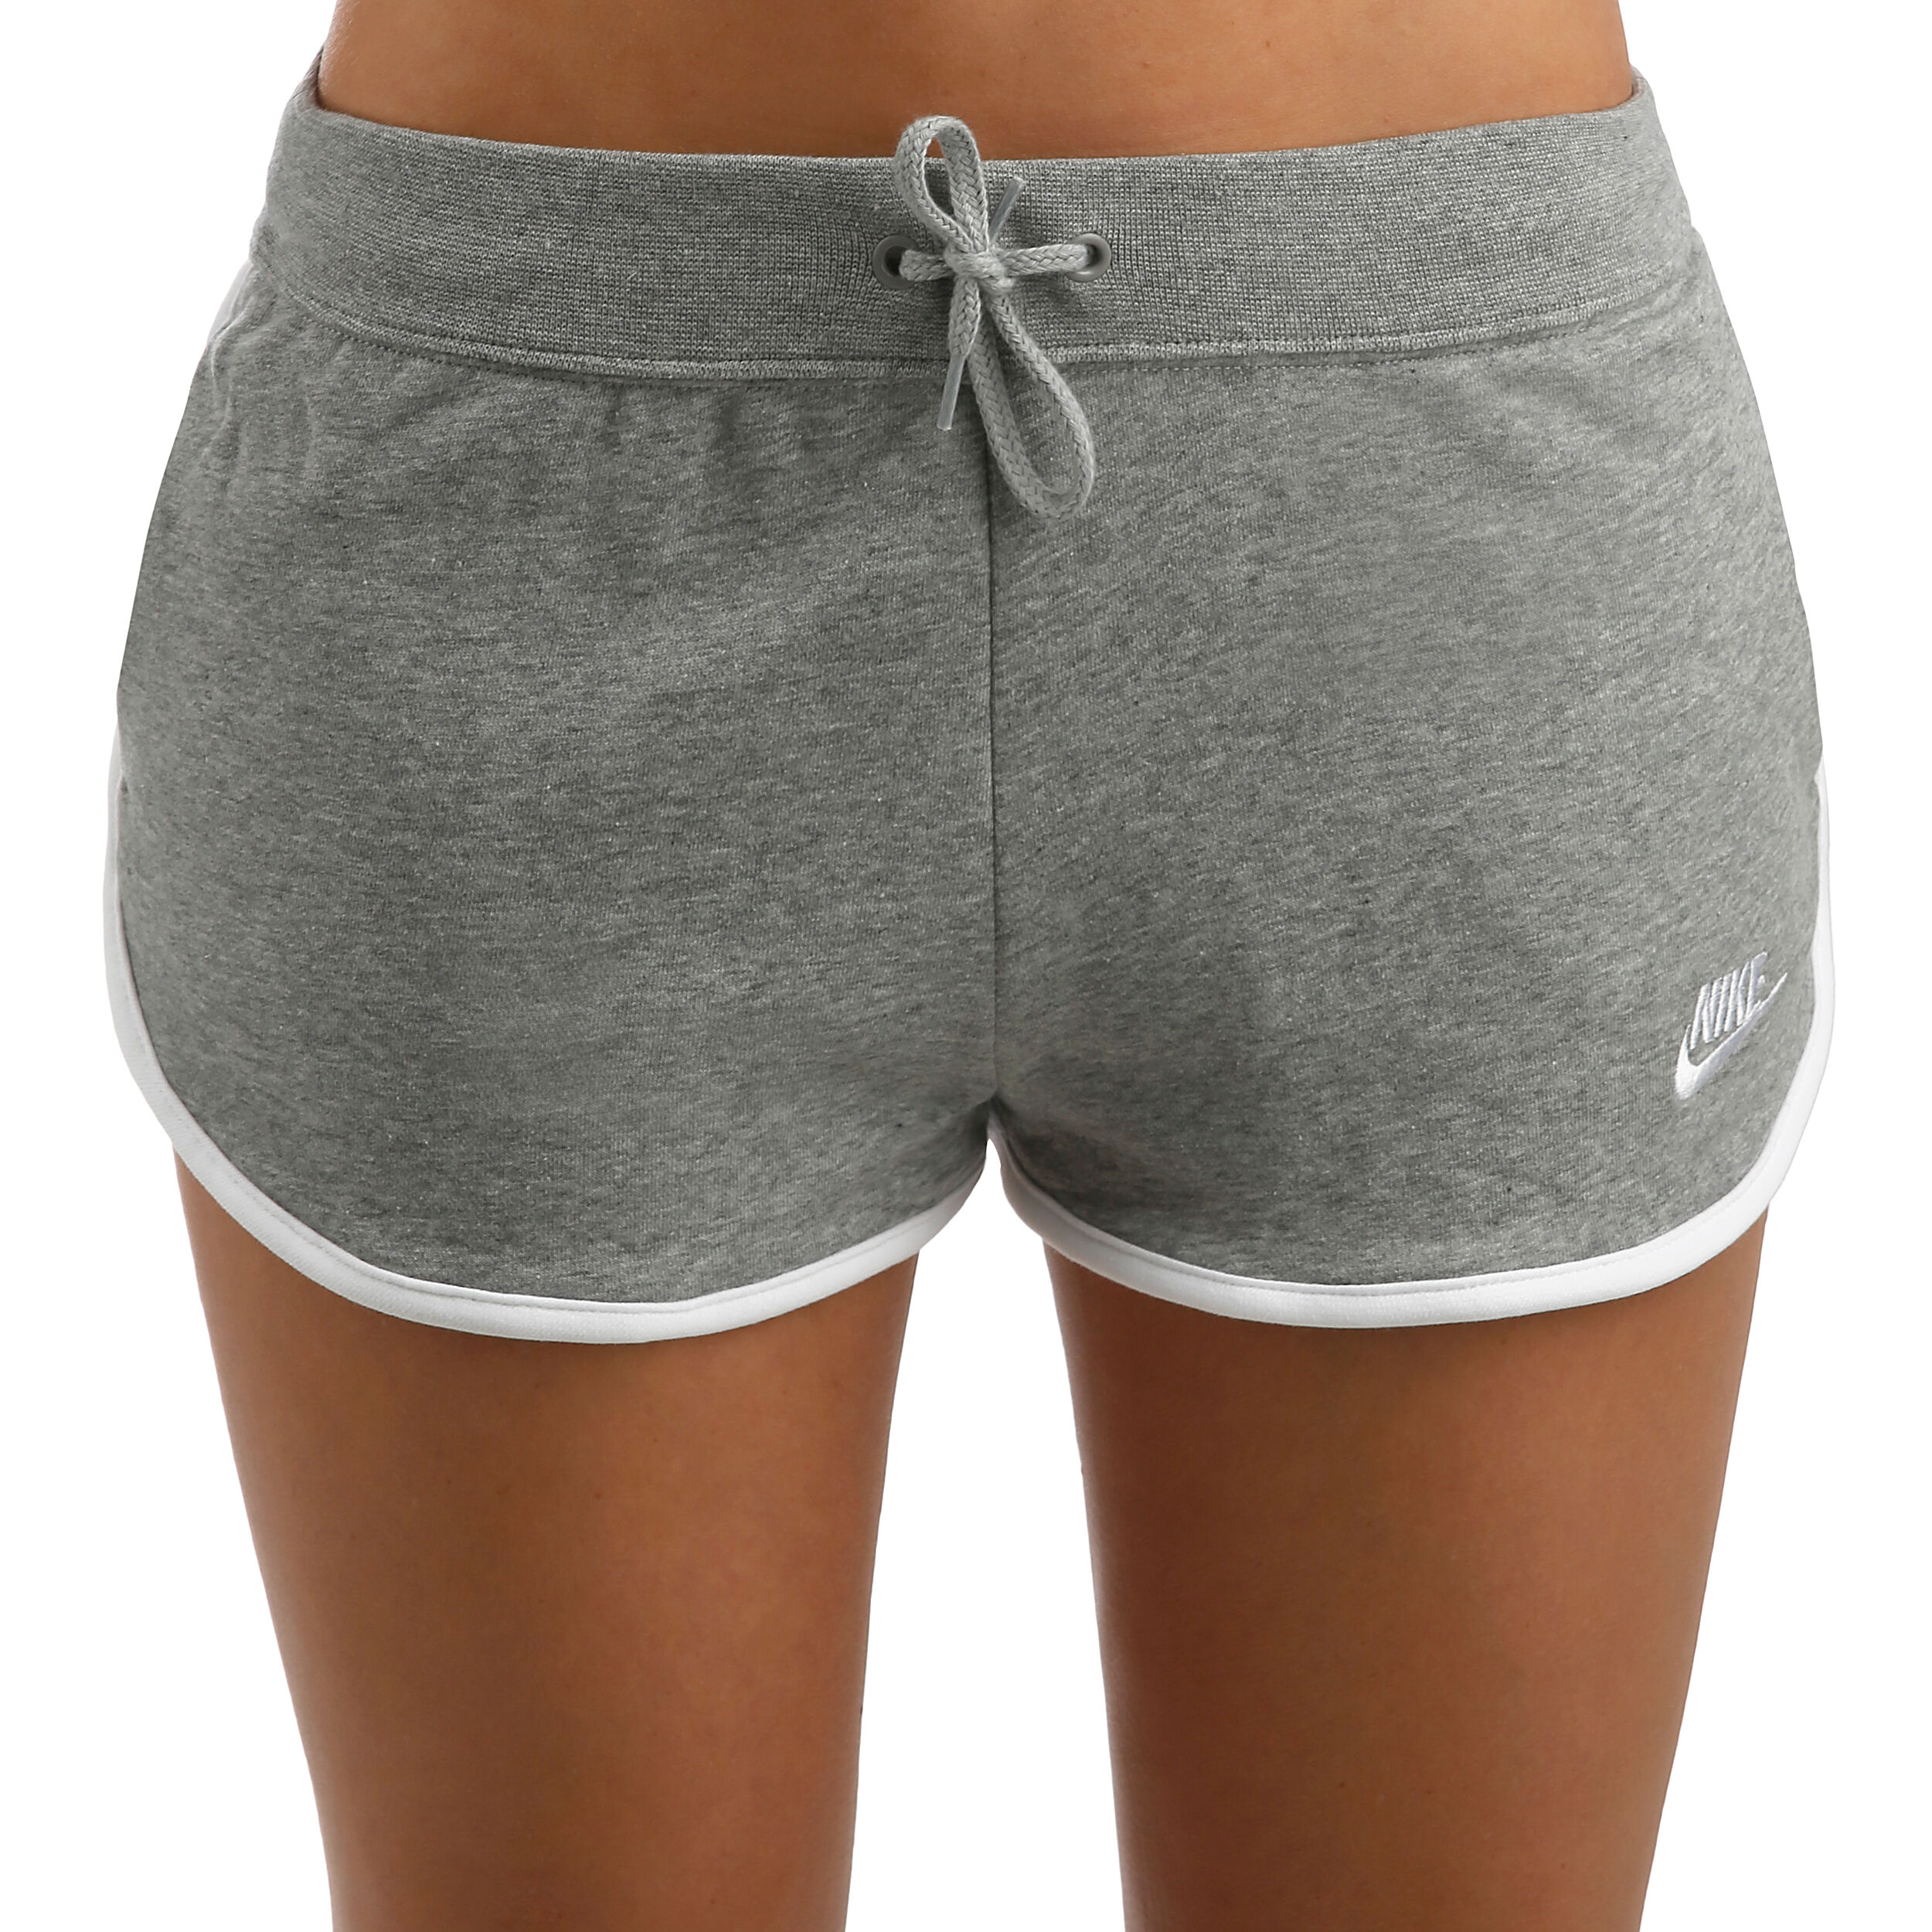 nike grey shorts womens